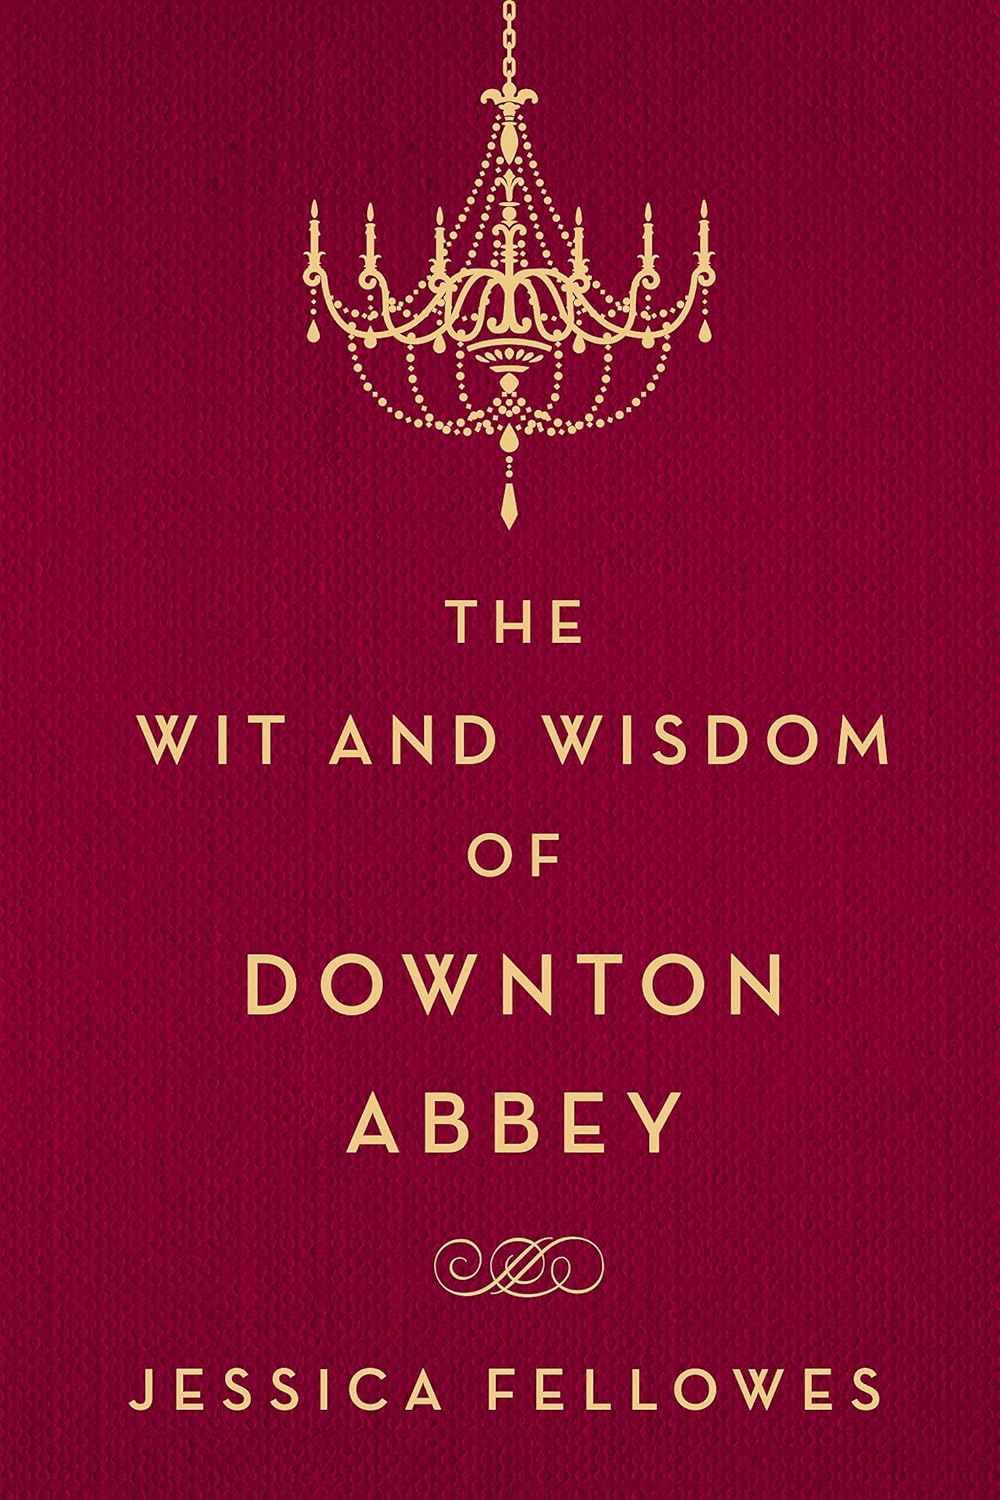 Downtown Abbey Book